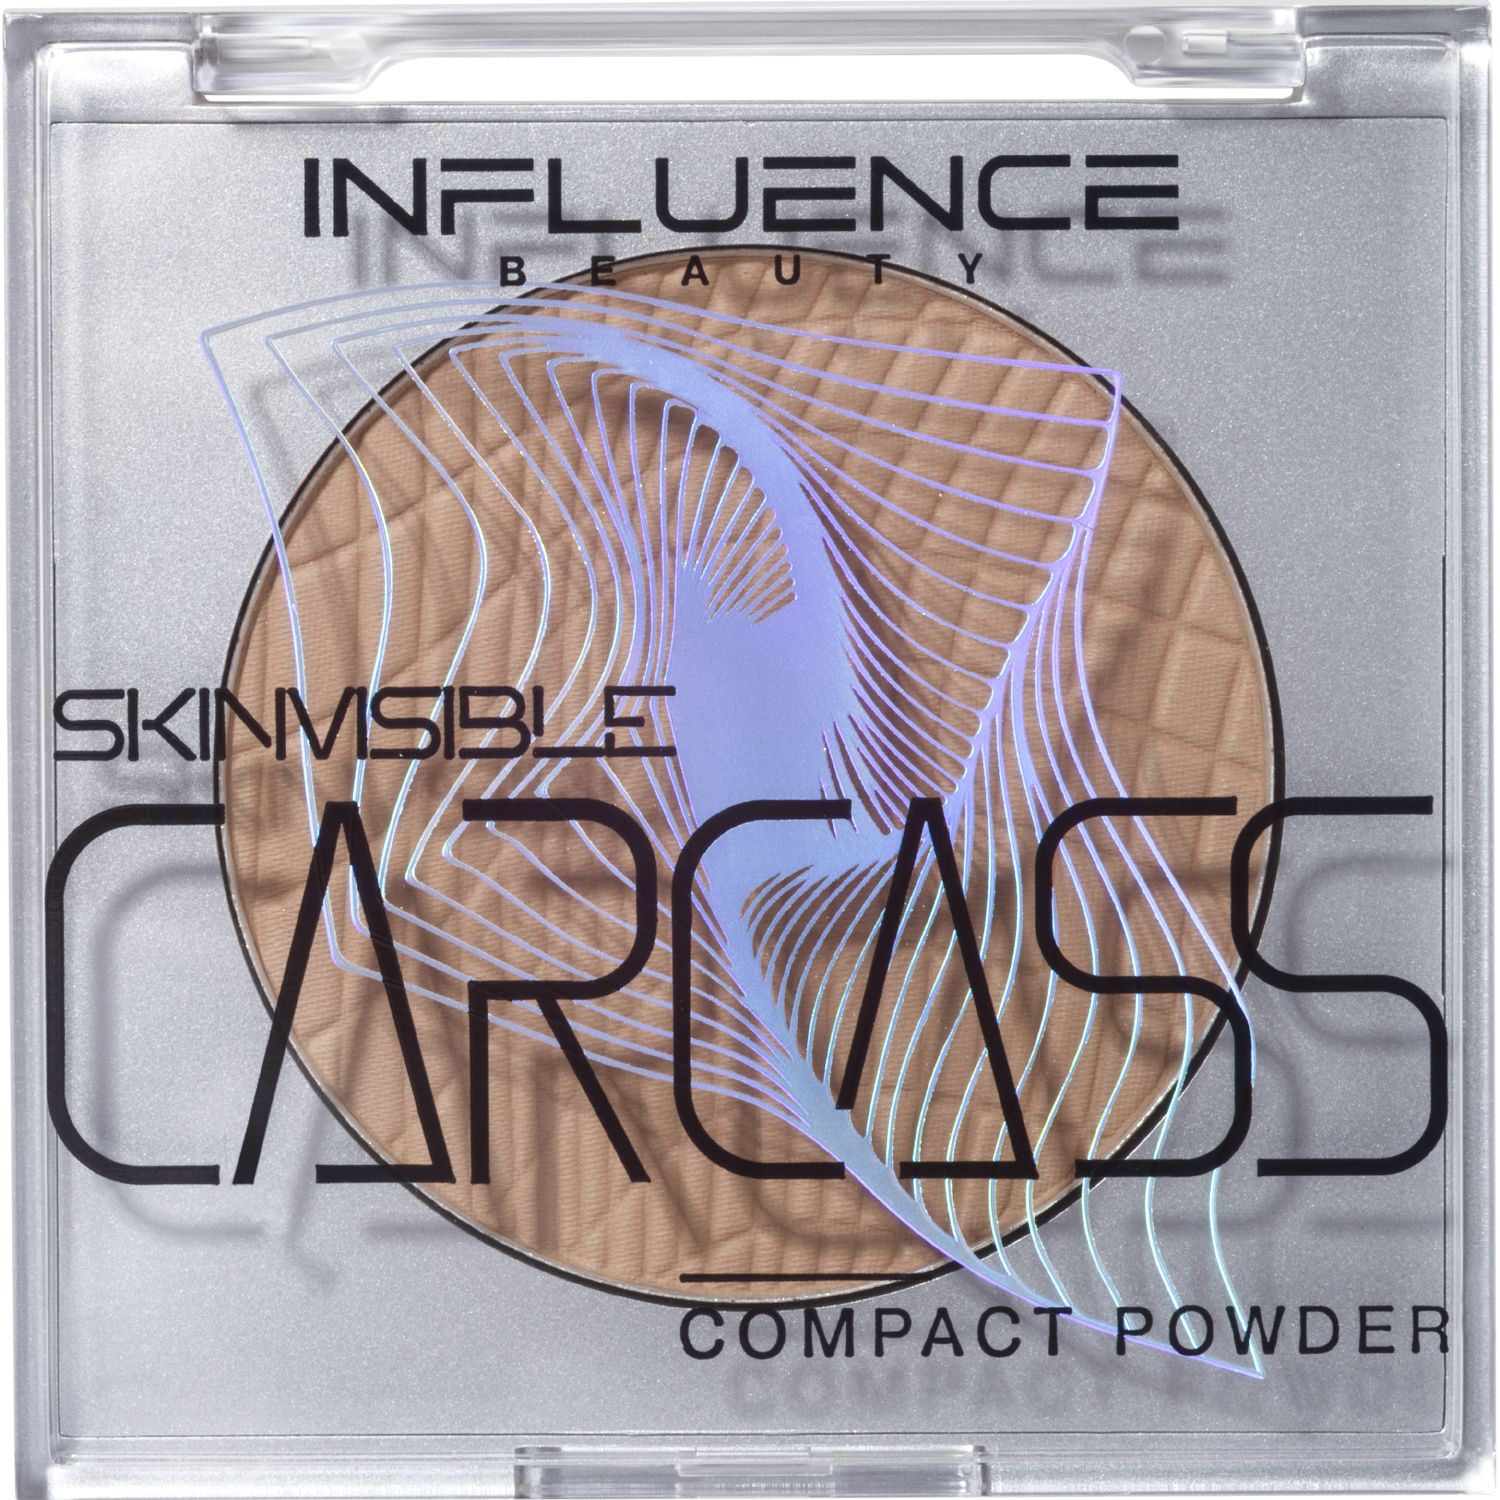 Пудра Influence Beauty SKINVISIBLE CARCASS компактная, легкая, тон 04 темно-бежевый, 4,2 г